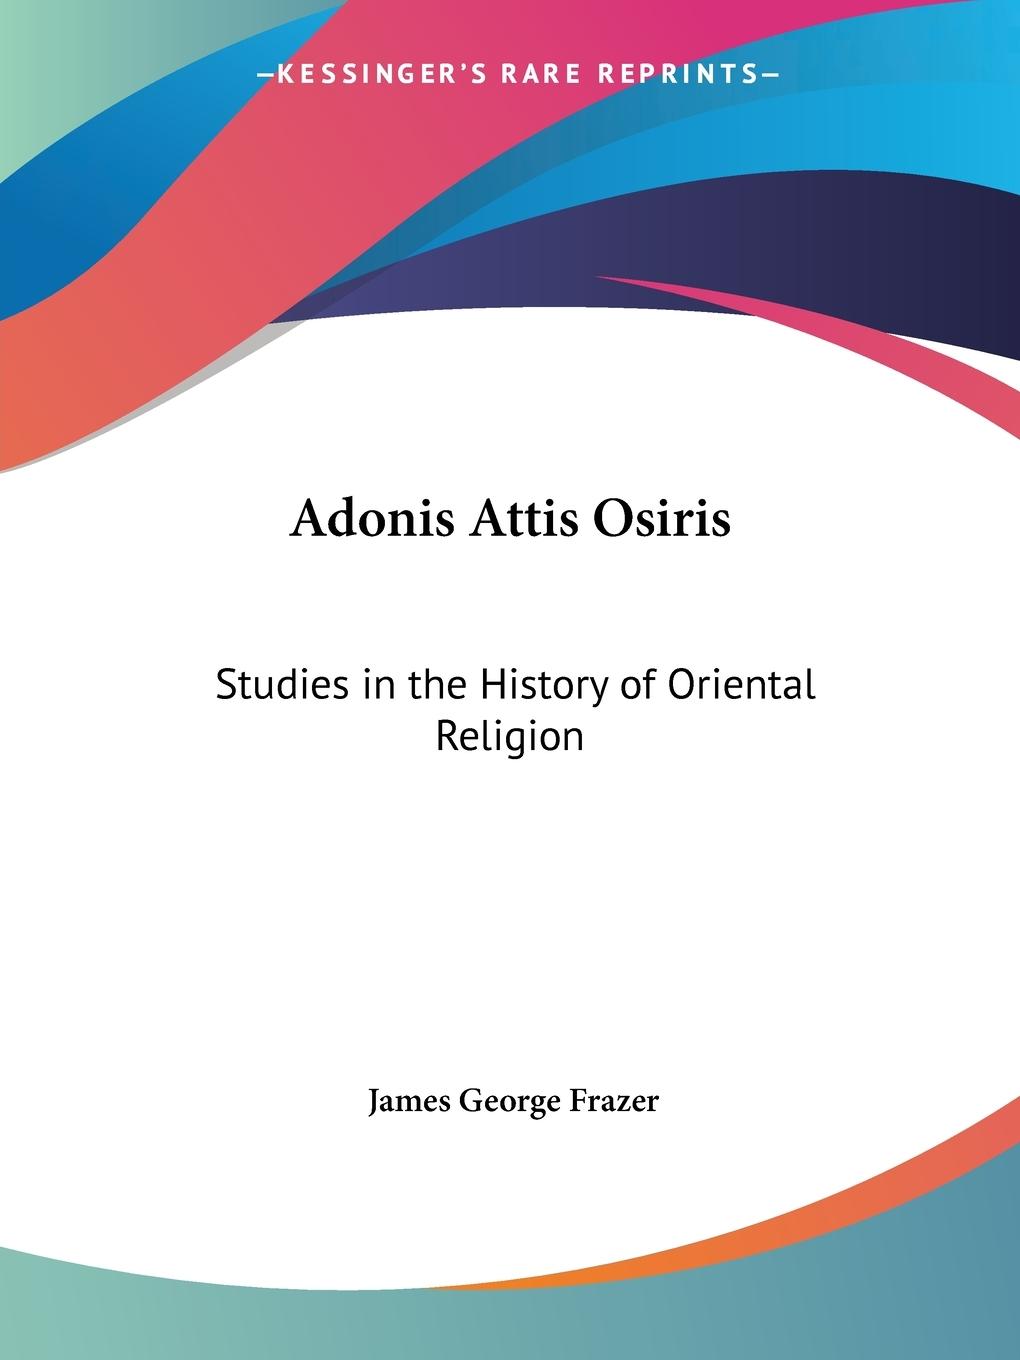 Adonis Attis Osiris - Frazer, James George